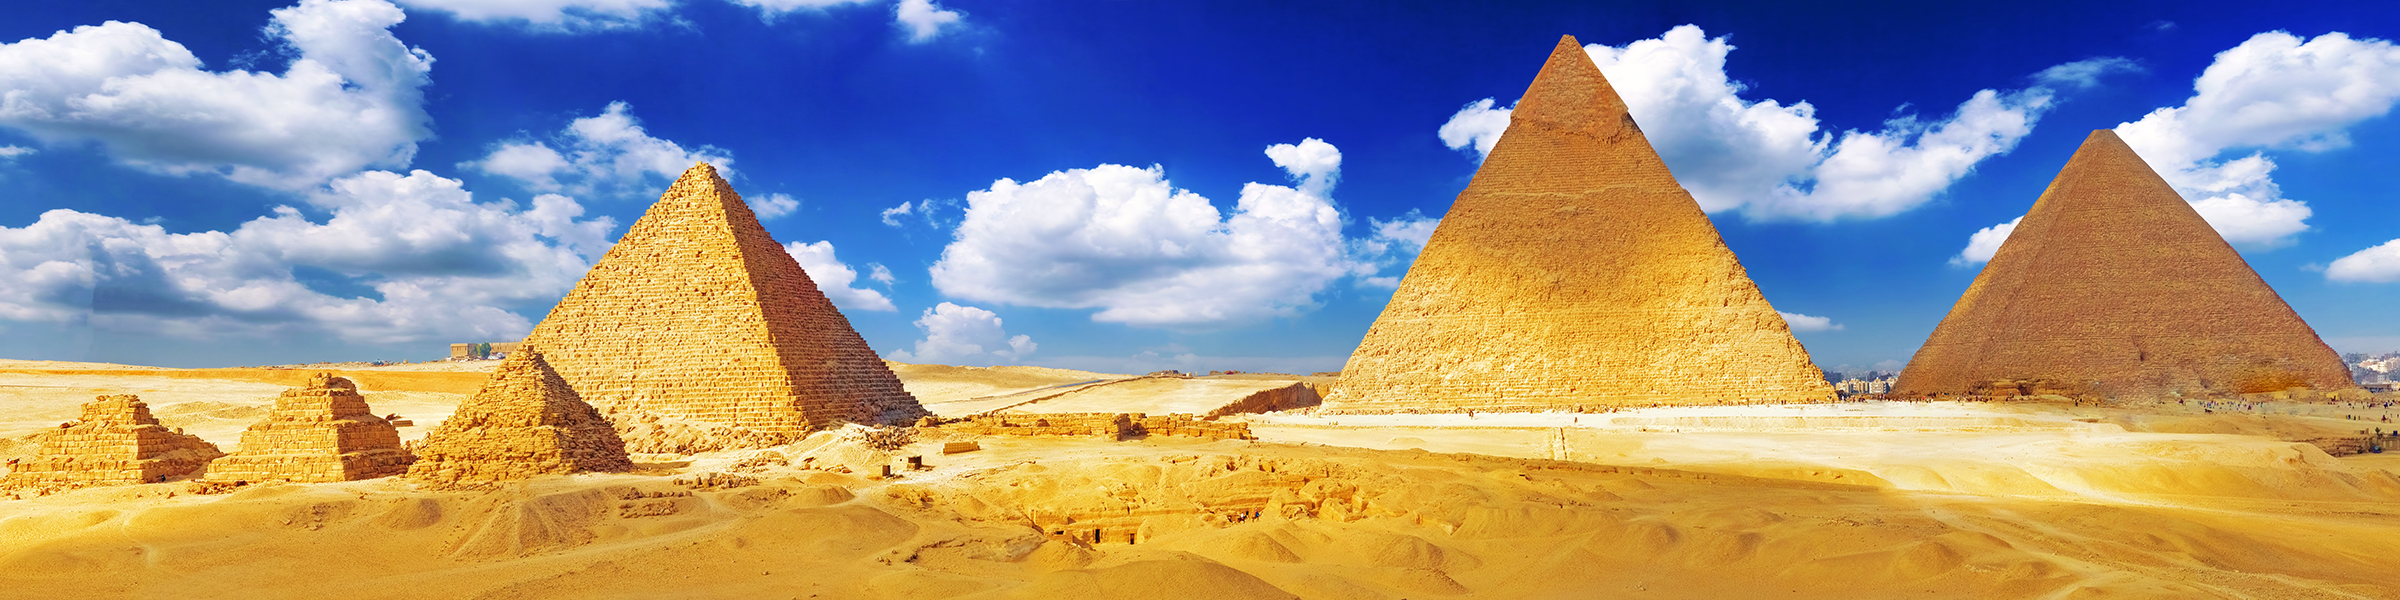 Egypt Great Pyramid of Giza